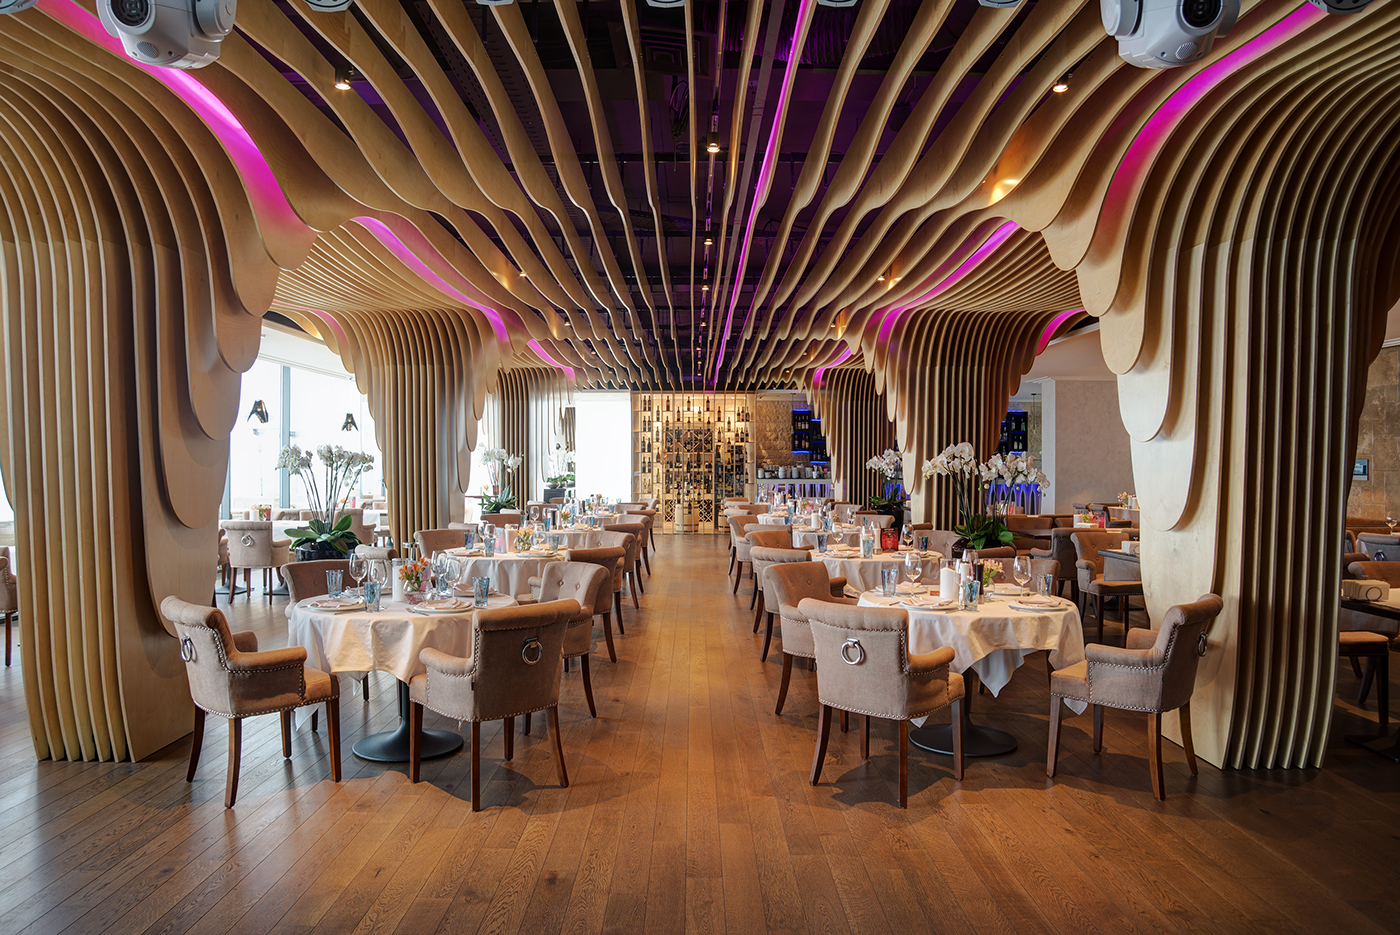 restaurantdesign restaurantawards Beachrestaurant seaview restaurant classics wood woodenceiling ceiling ideas